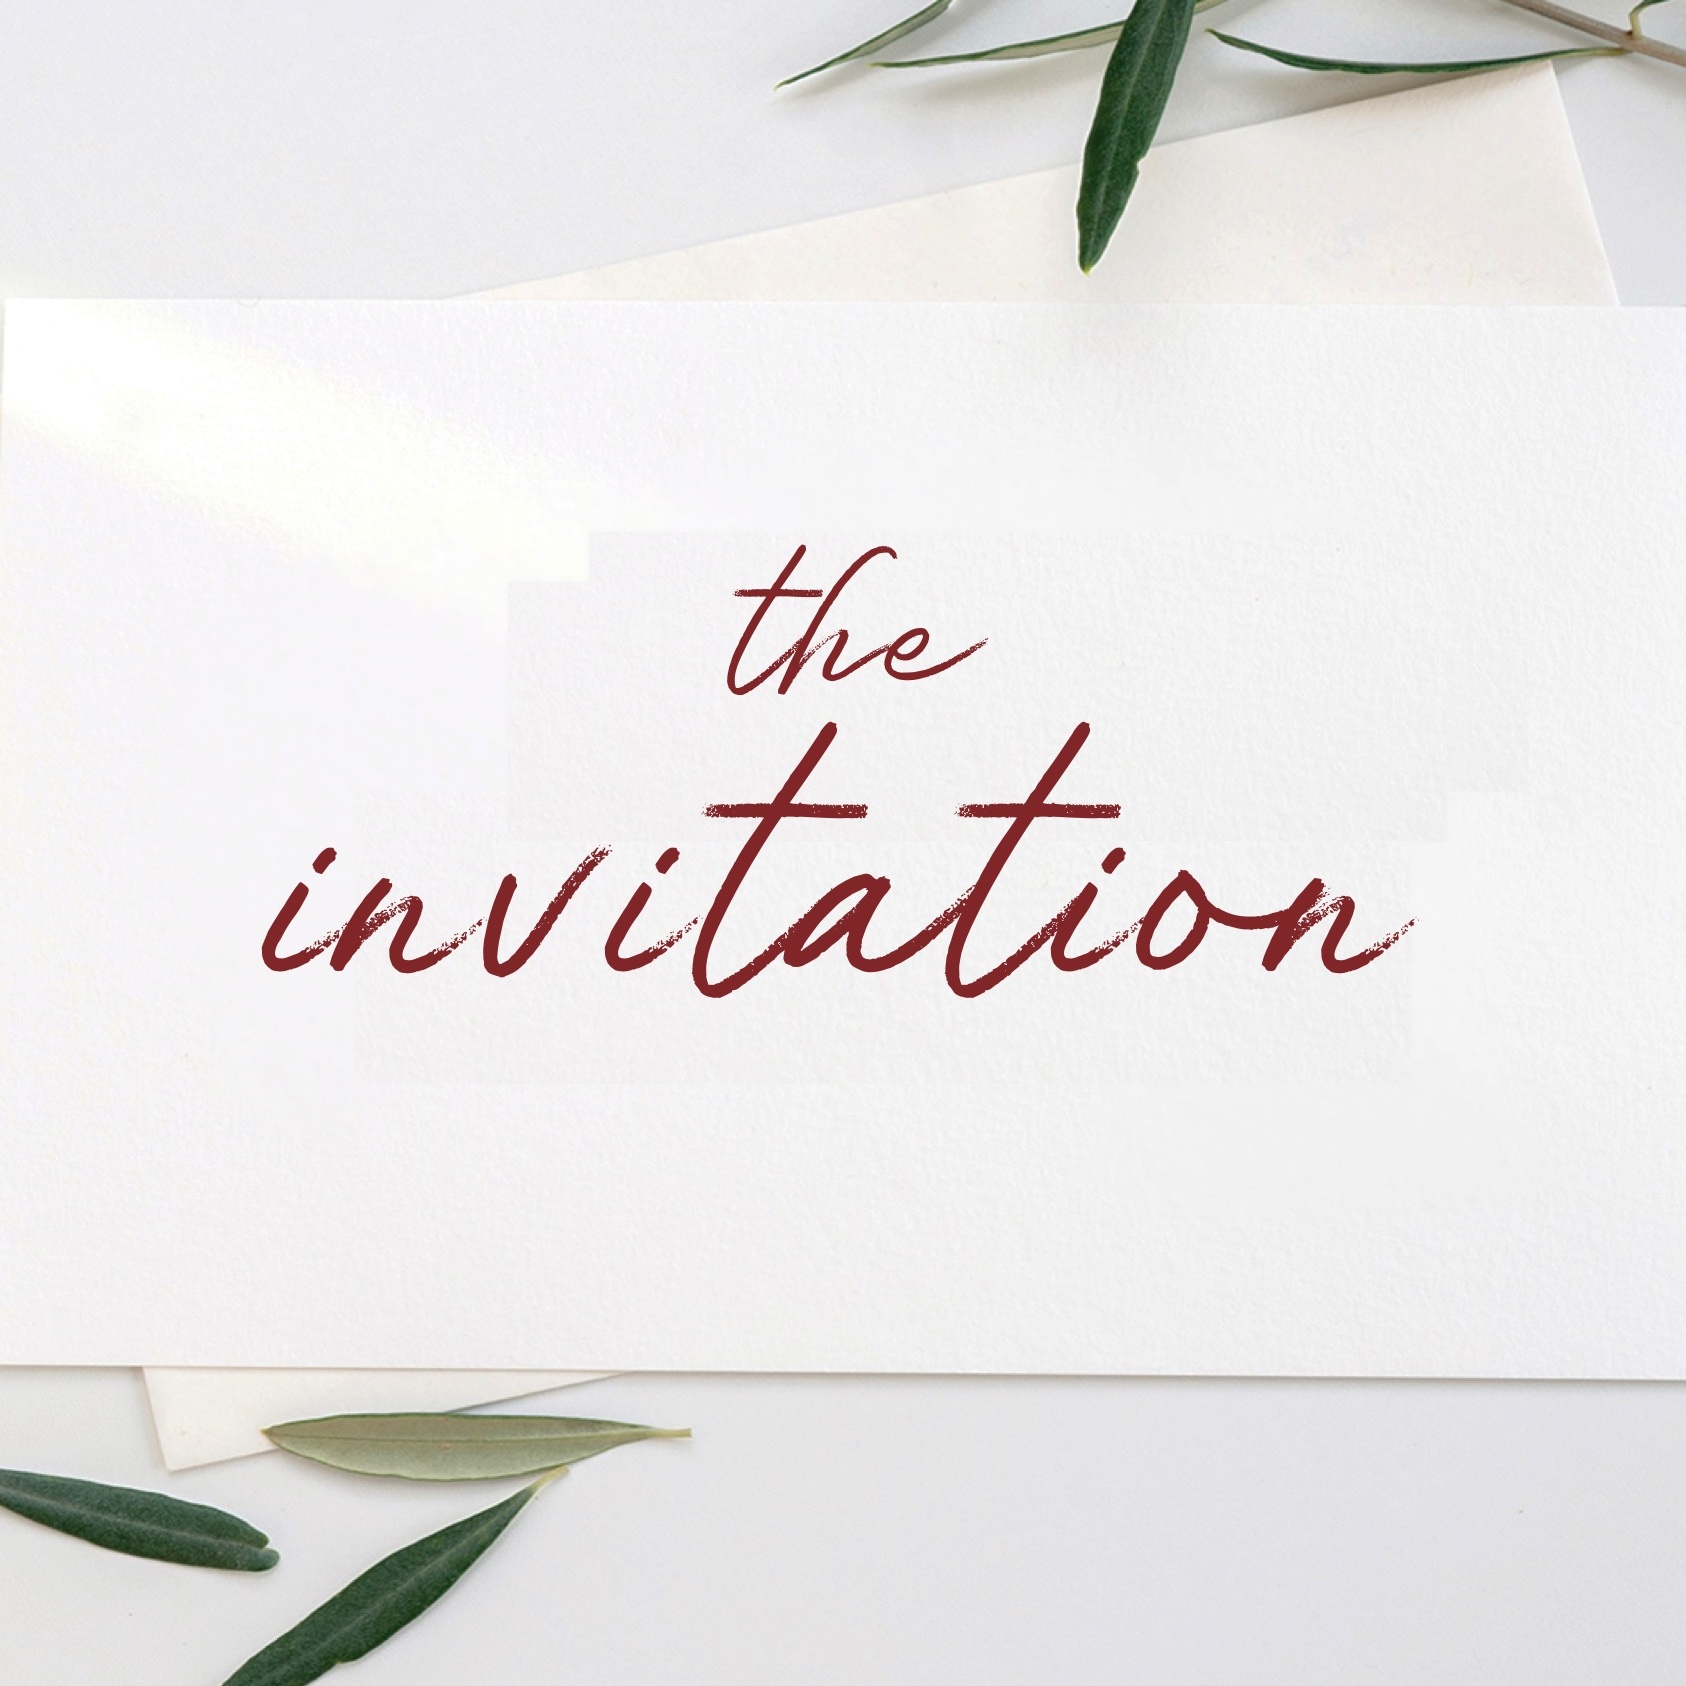 Ryan Post - "The Invitation"